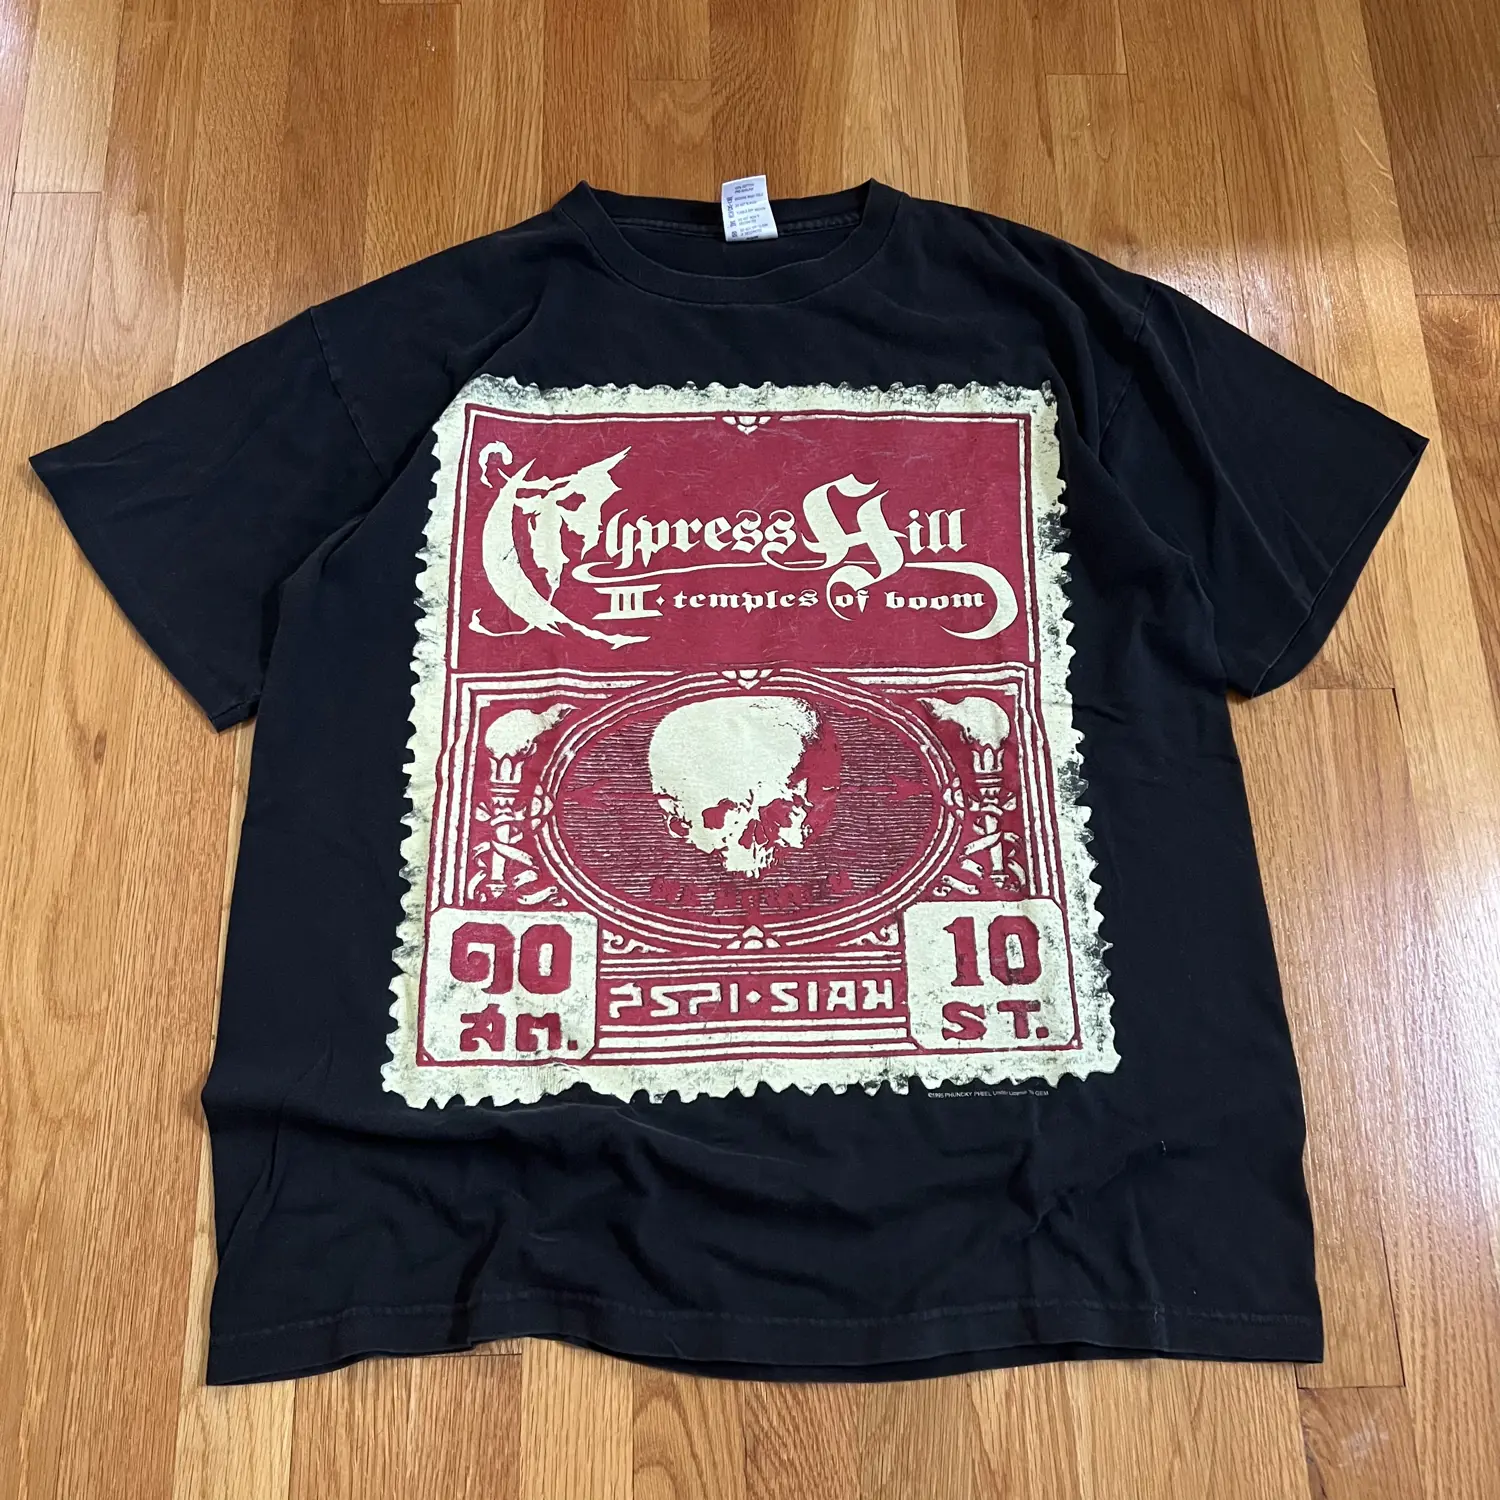 Vintage 1995 Cypress Hill Tshirt (XL)